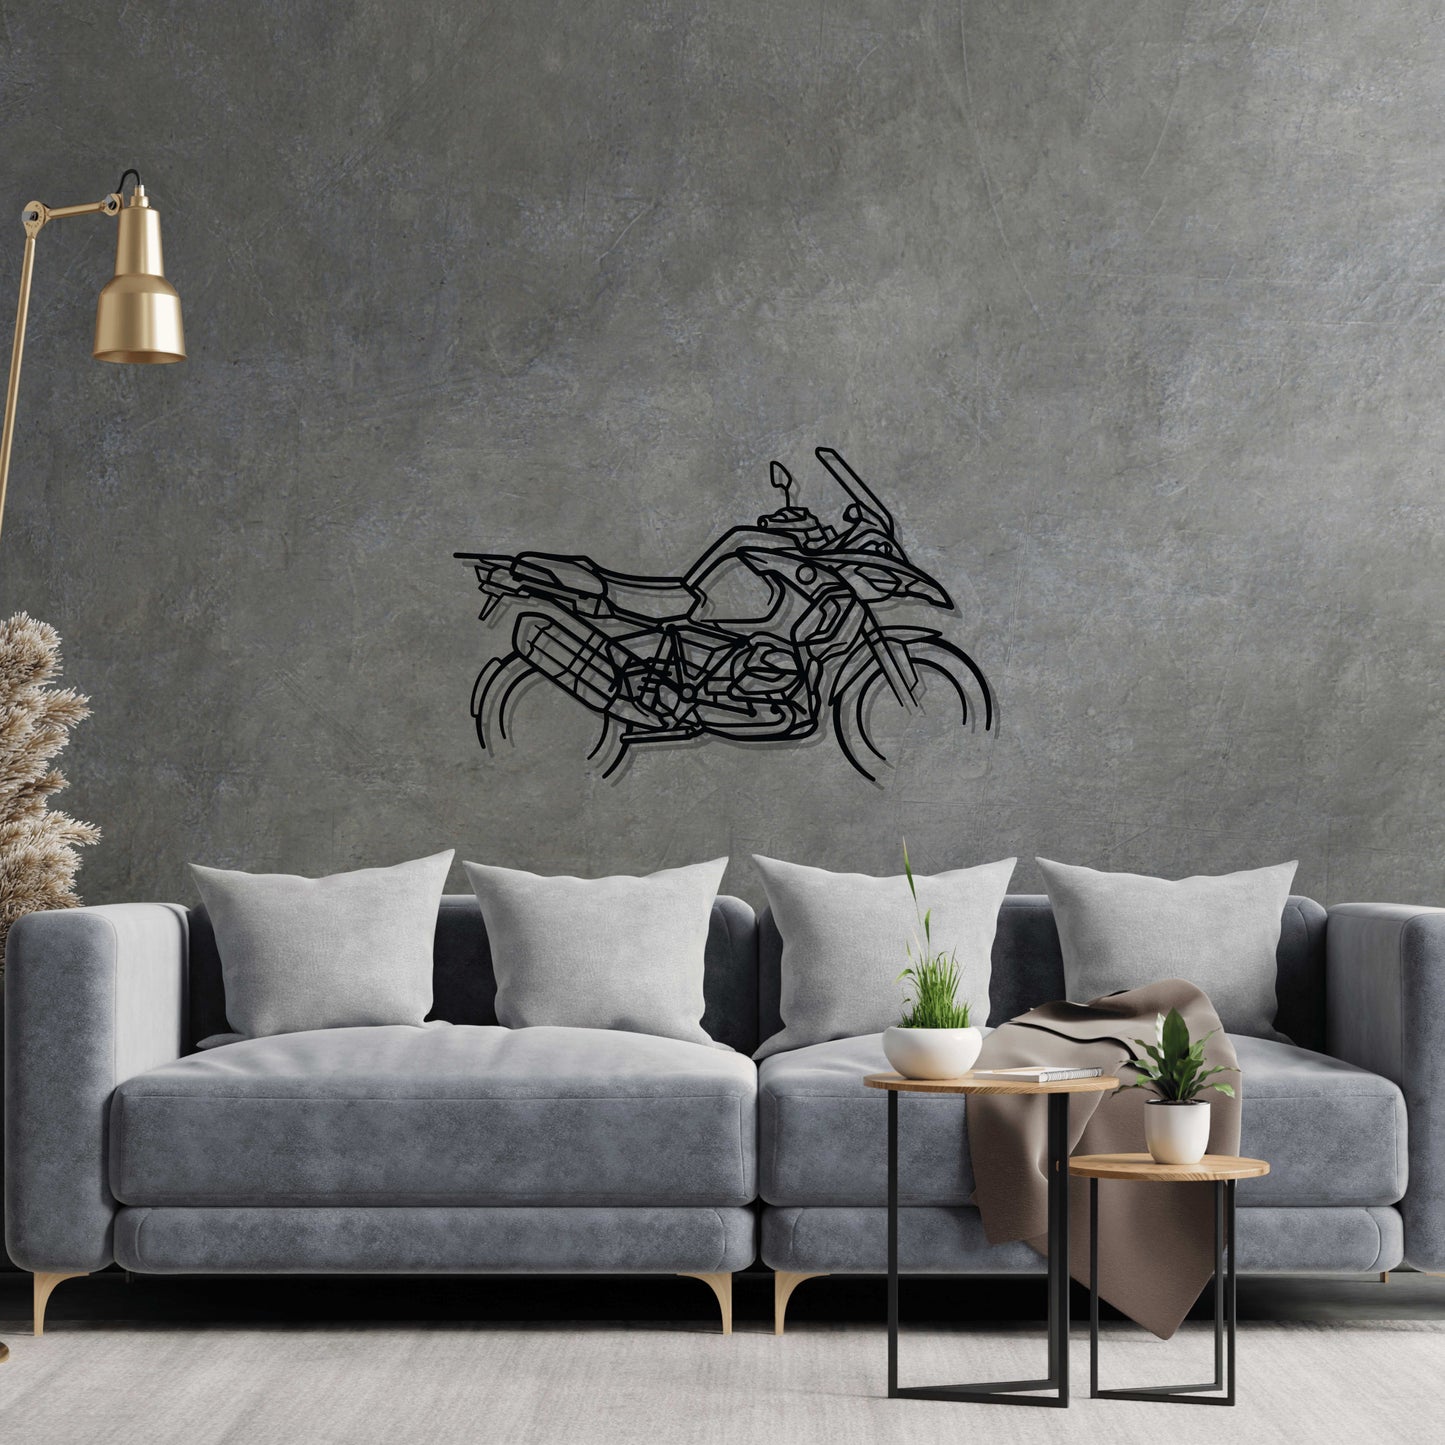 Motorcycle Metal Signs - Metal Motorcycle Wall Art - Metal Signs For Garage - Garage Decorations